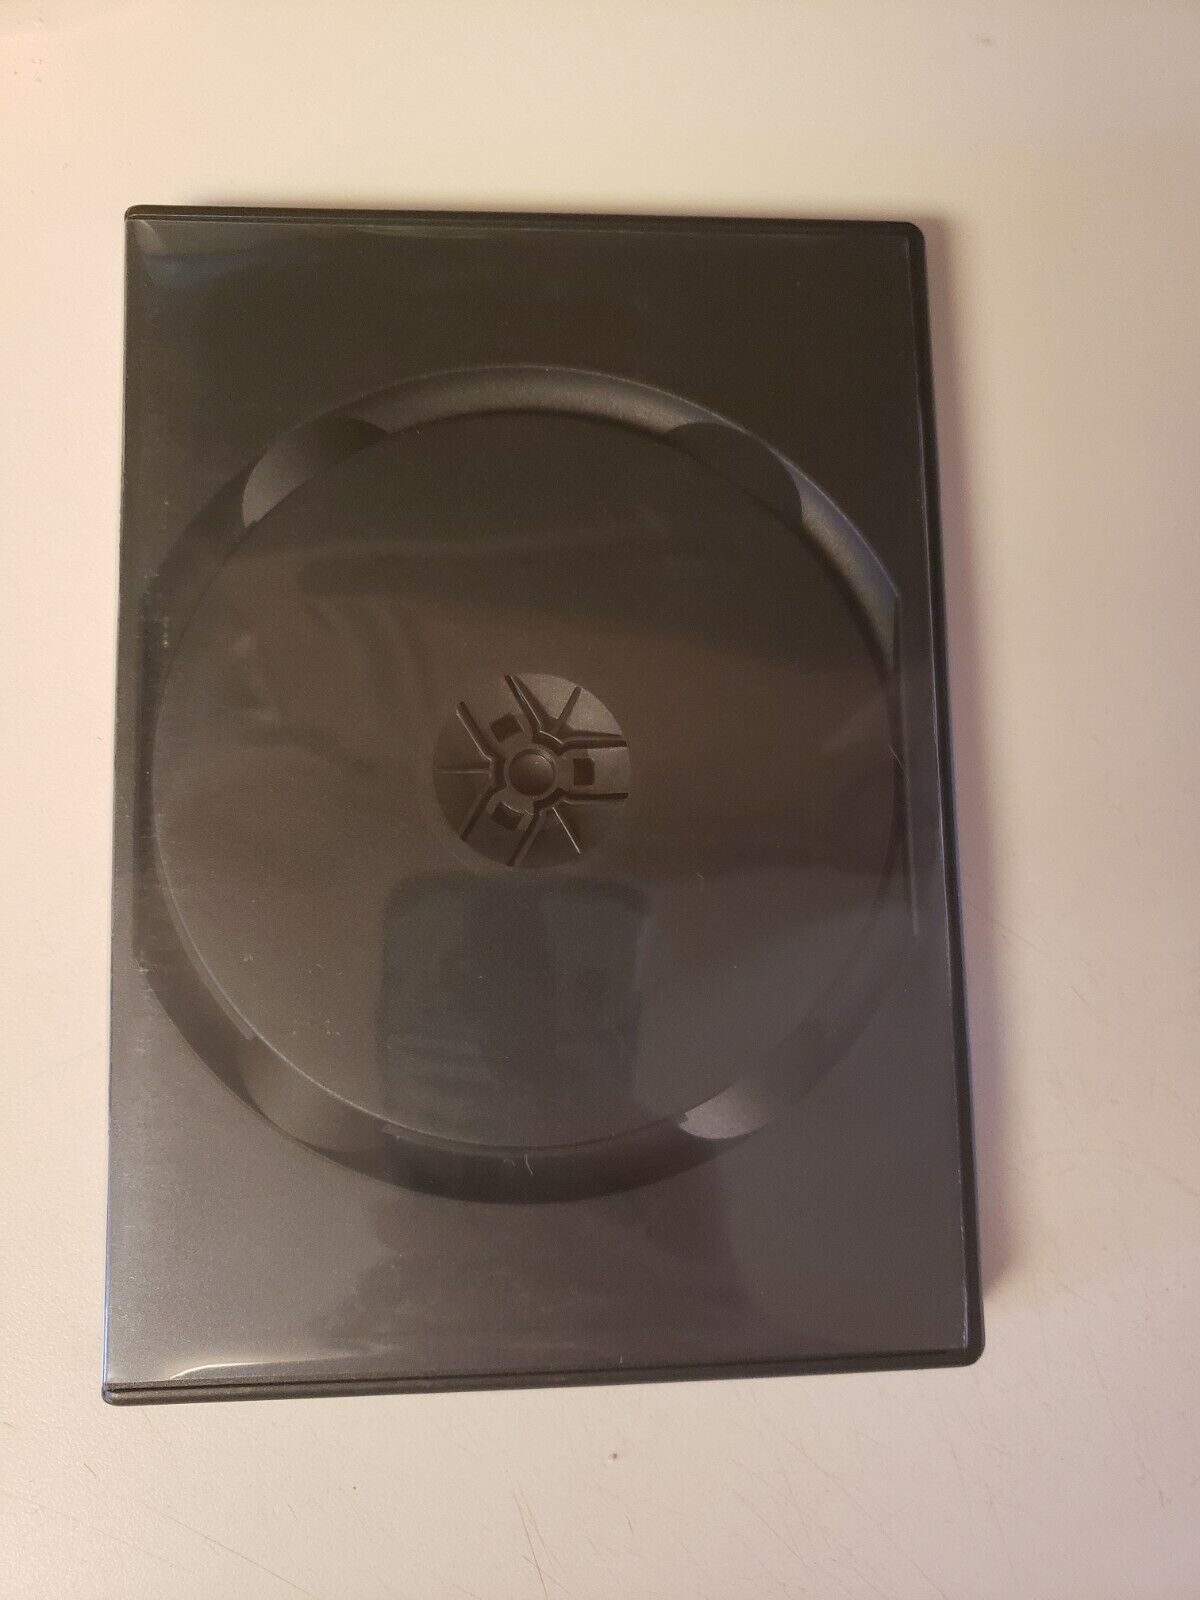 20 Standard 14mm Single CD DVD Blue Ray Black Storage Case Box